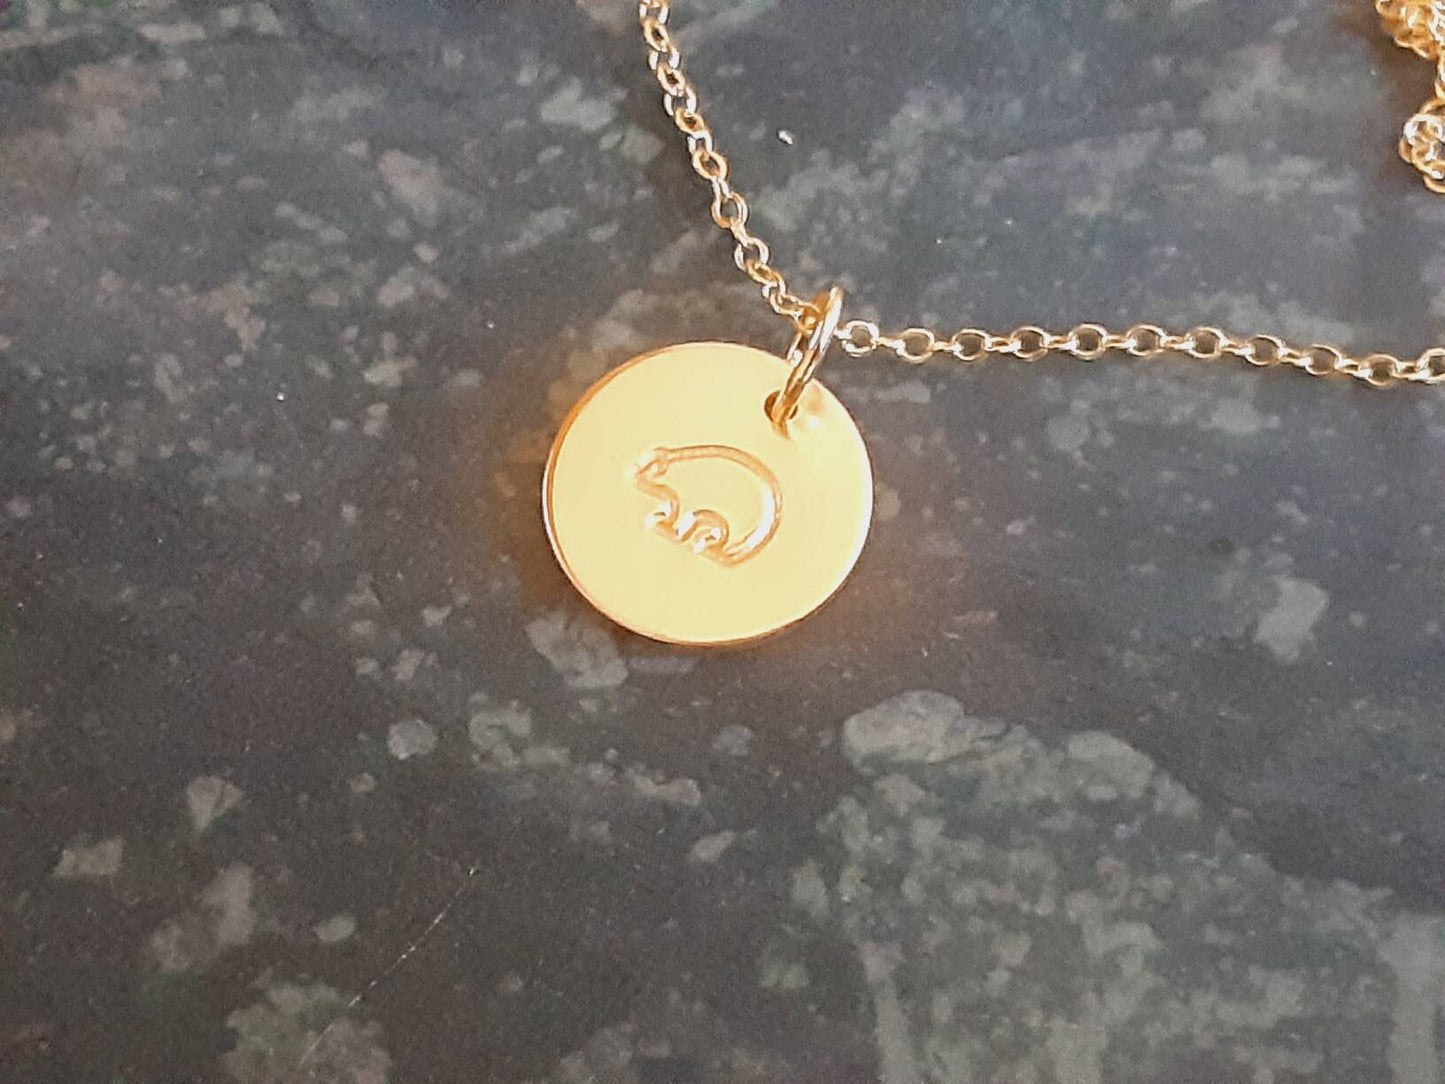 14k gold filled dainty bear charm necklace